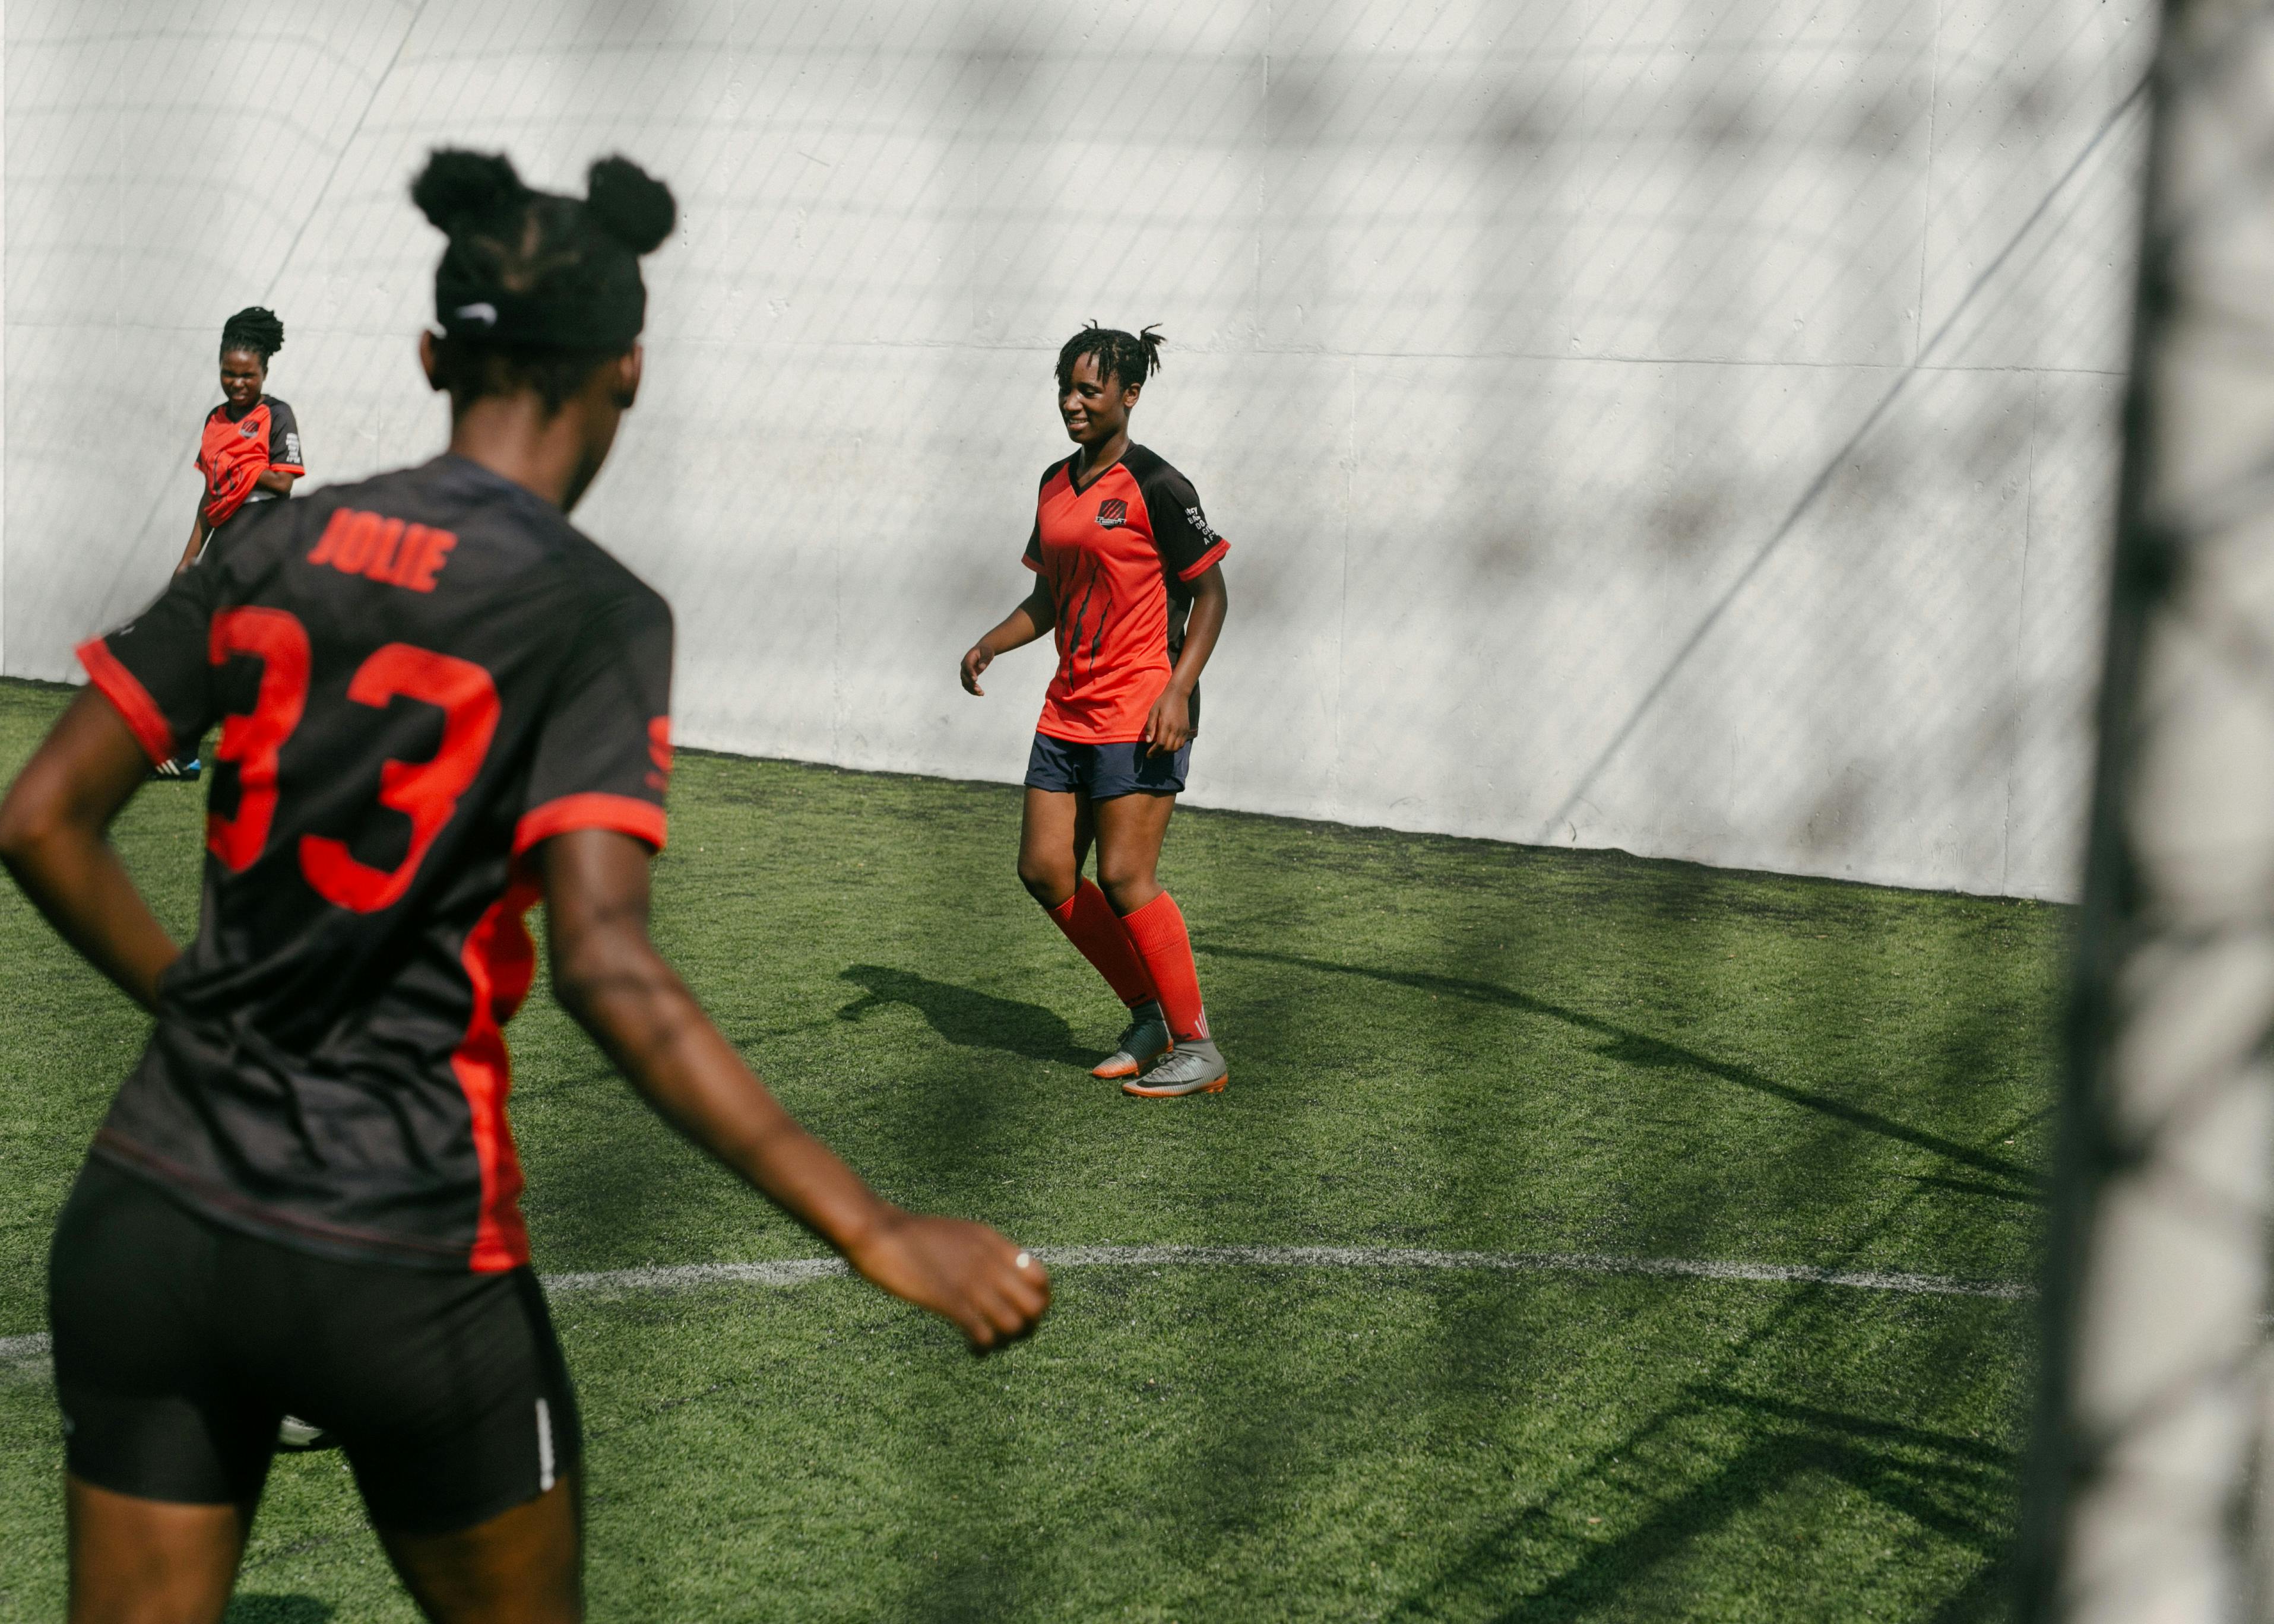 junior women soccer team during game